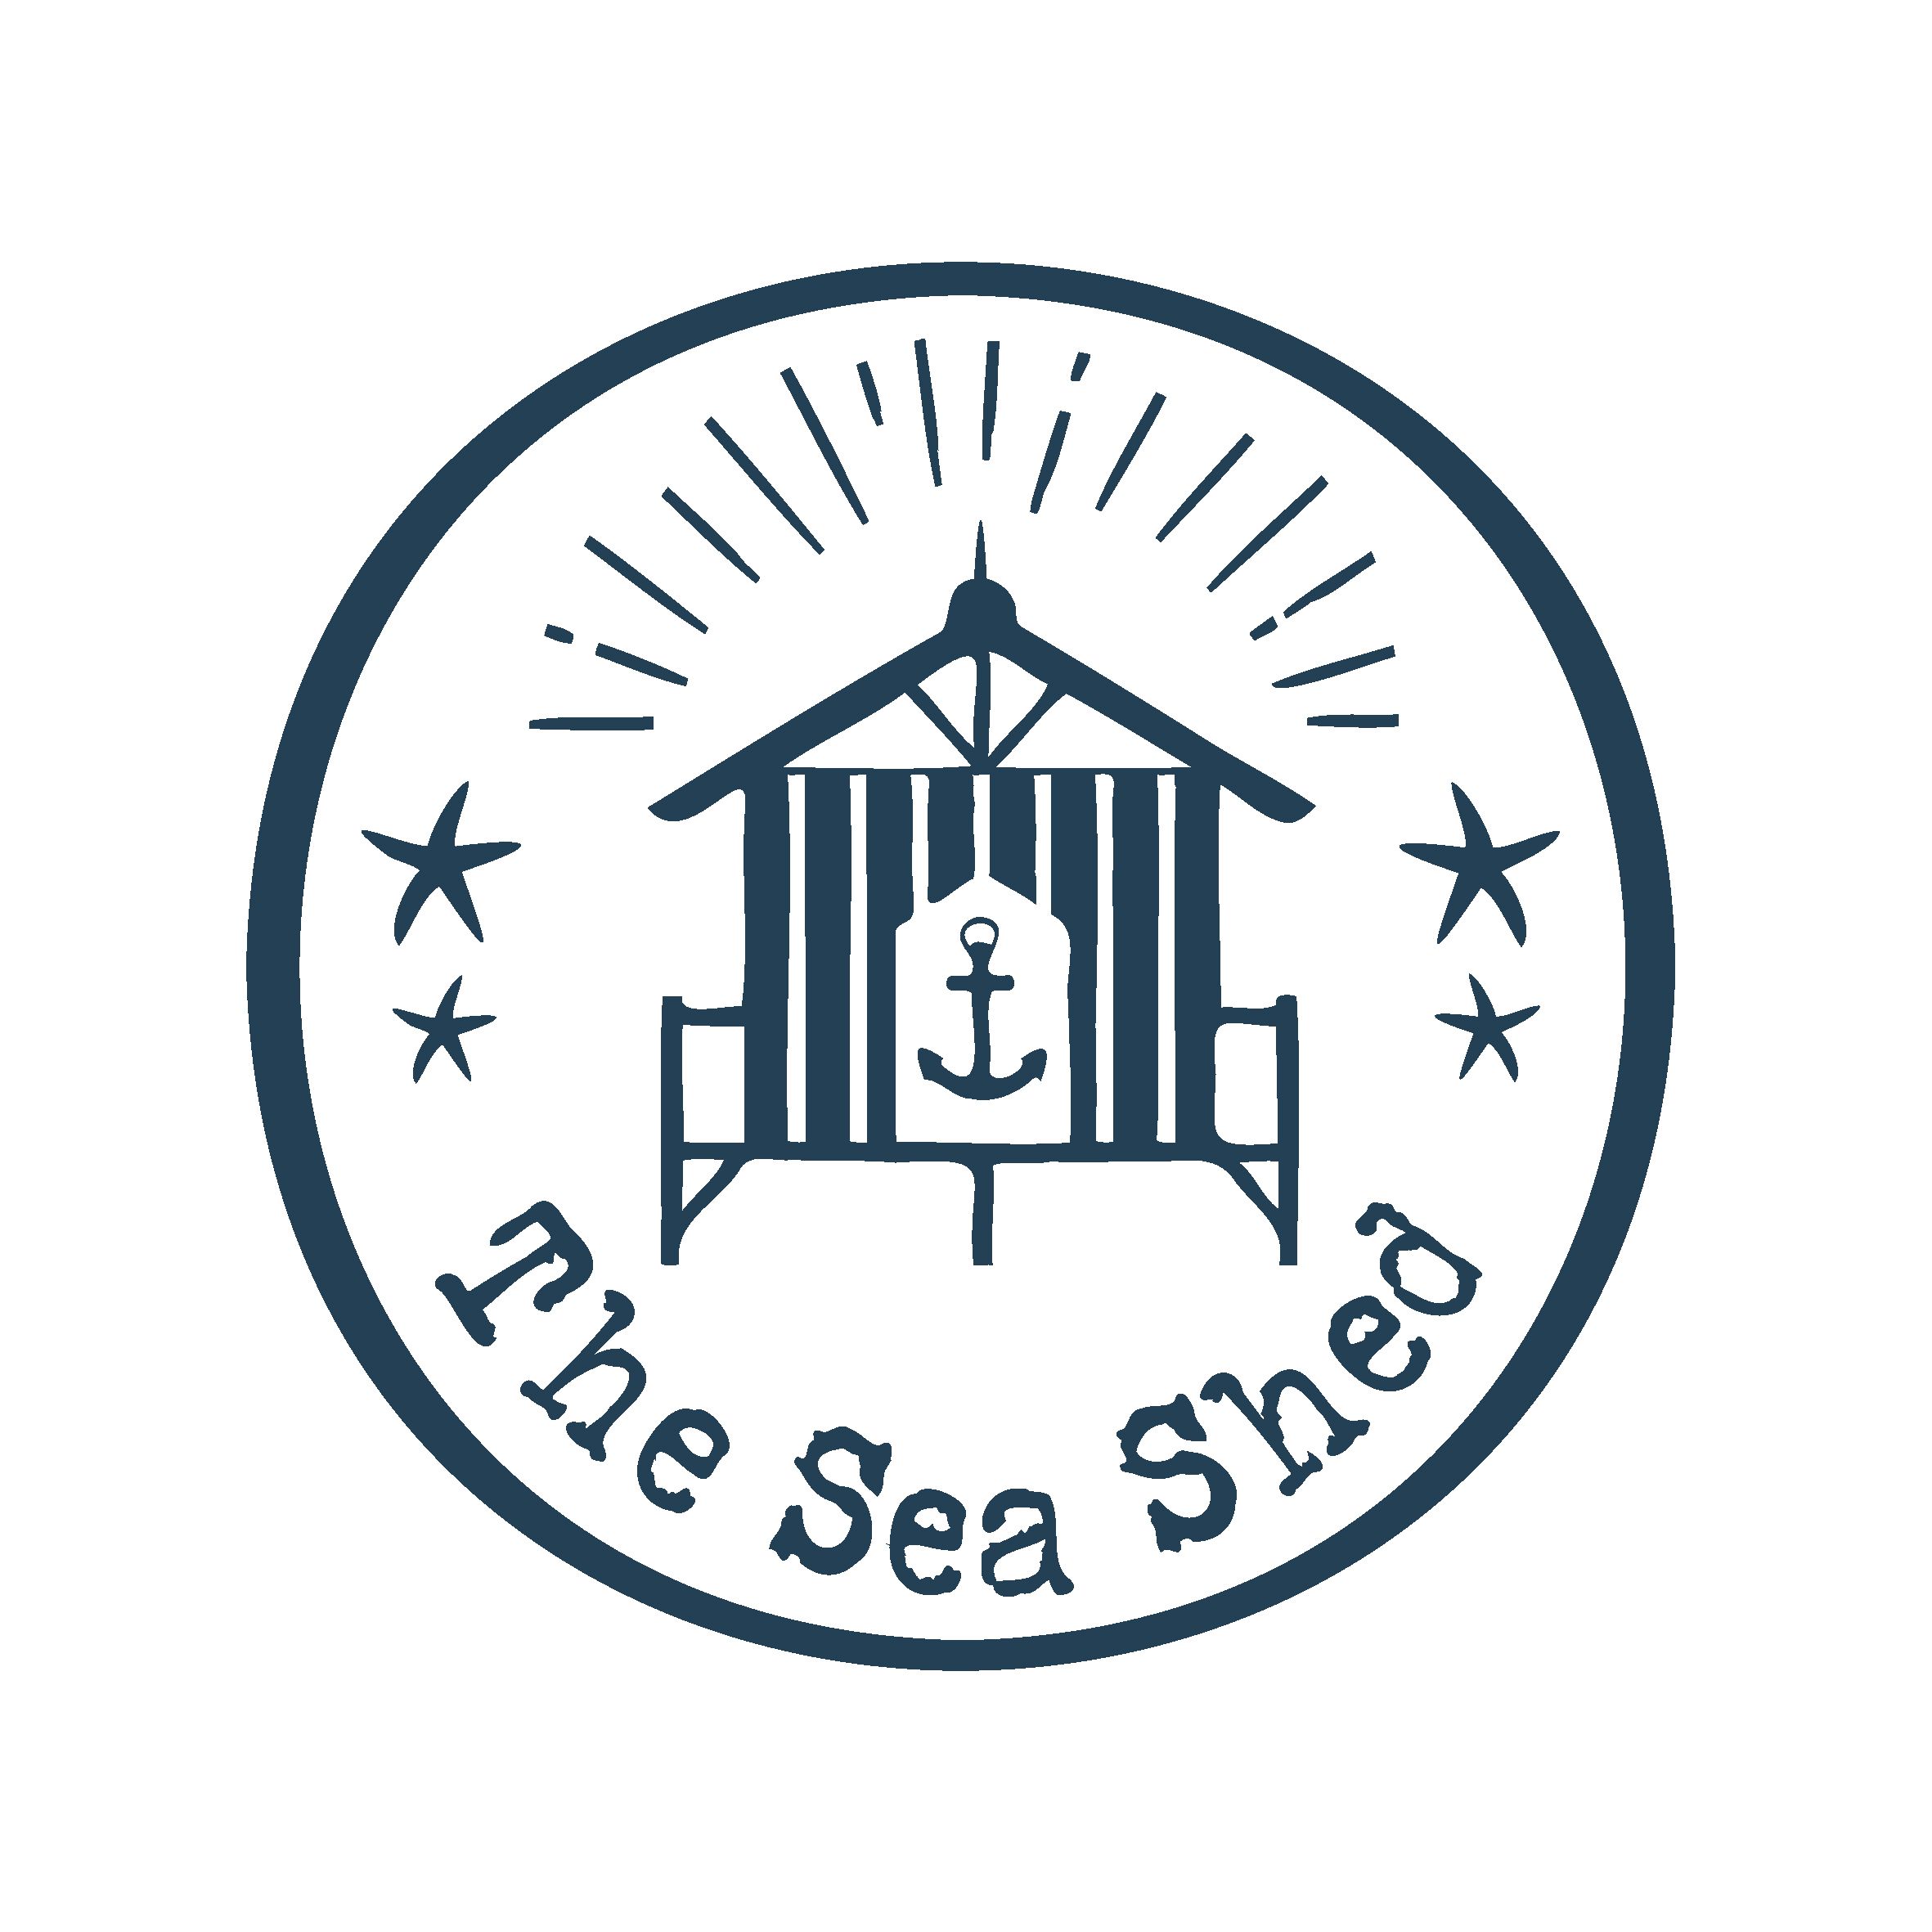 The Sea Shed Ltd